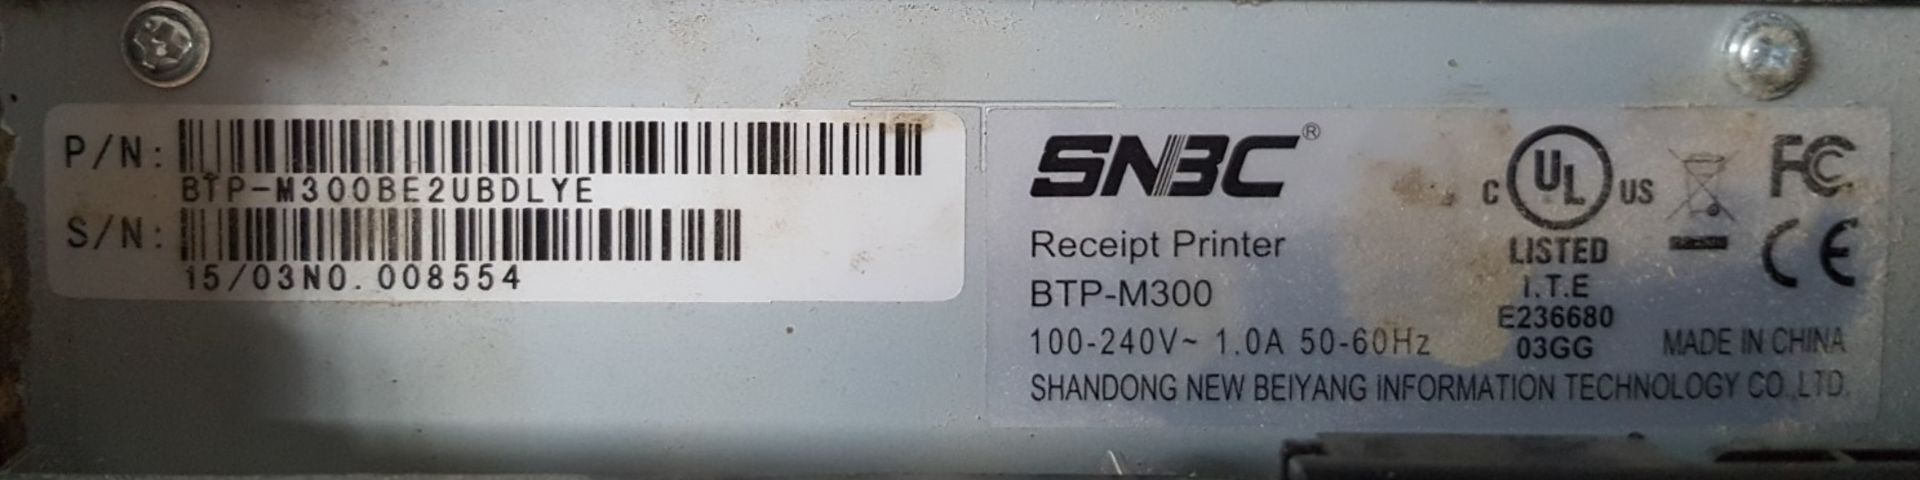 1 x SNBC Ethernet/USB Receipt Printer BTP-M300 Black - Ref BY114 AC3 - Image 4 of 5